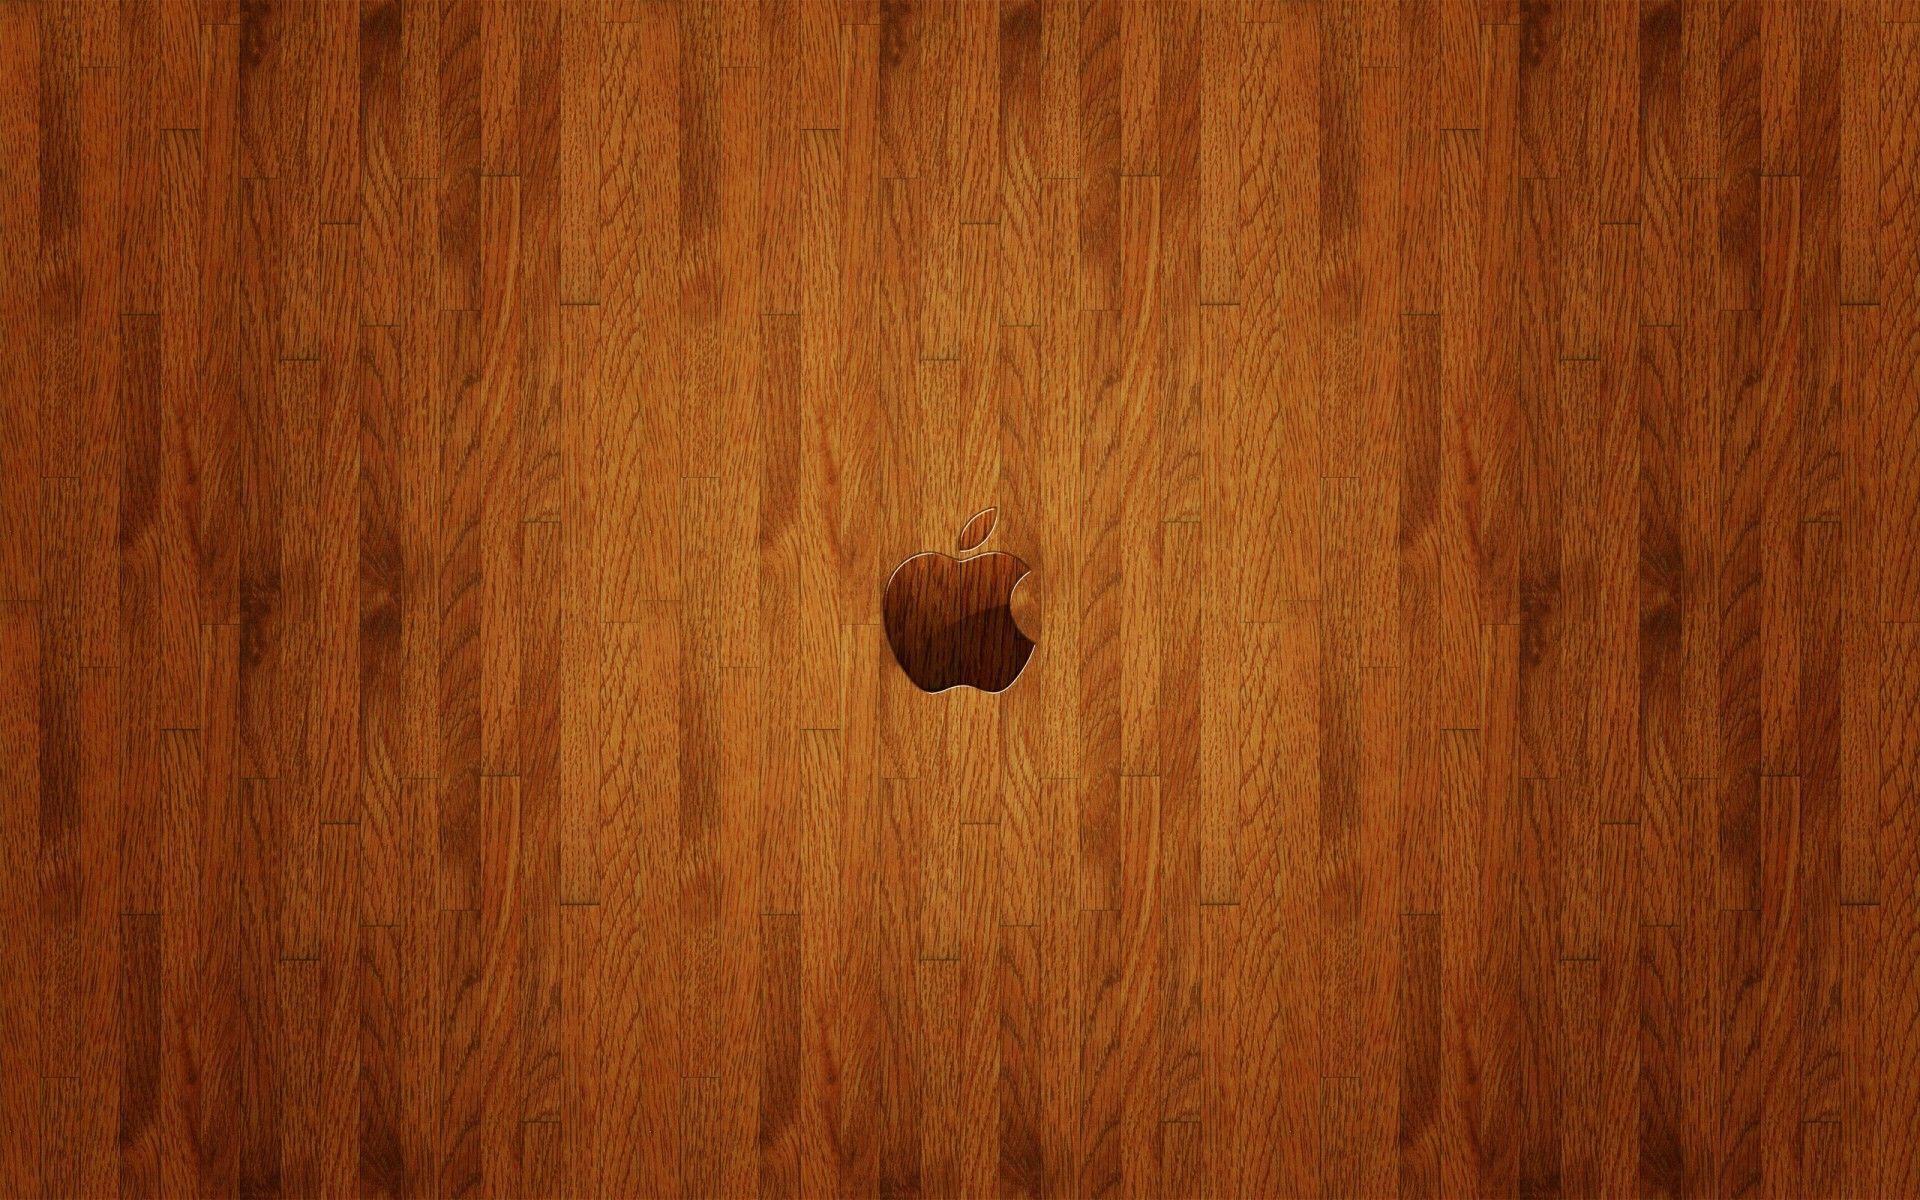 Wood Apple Wallpaper 1080p. HD Wallpaper , Picture, image